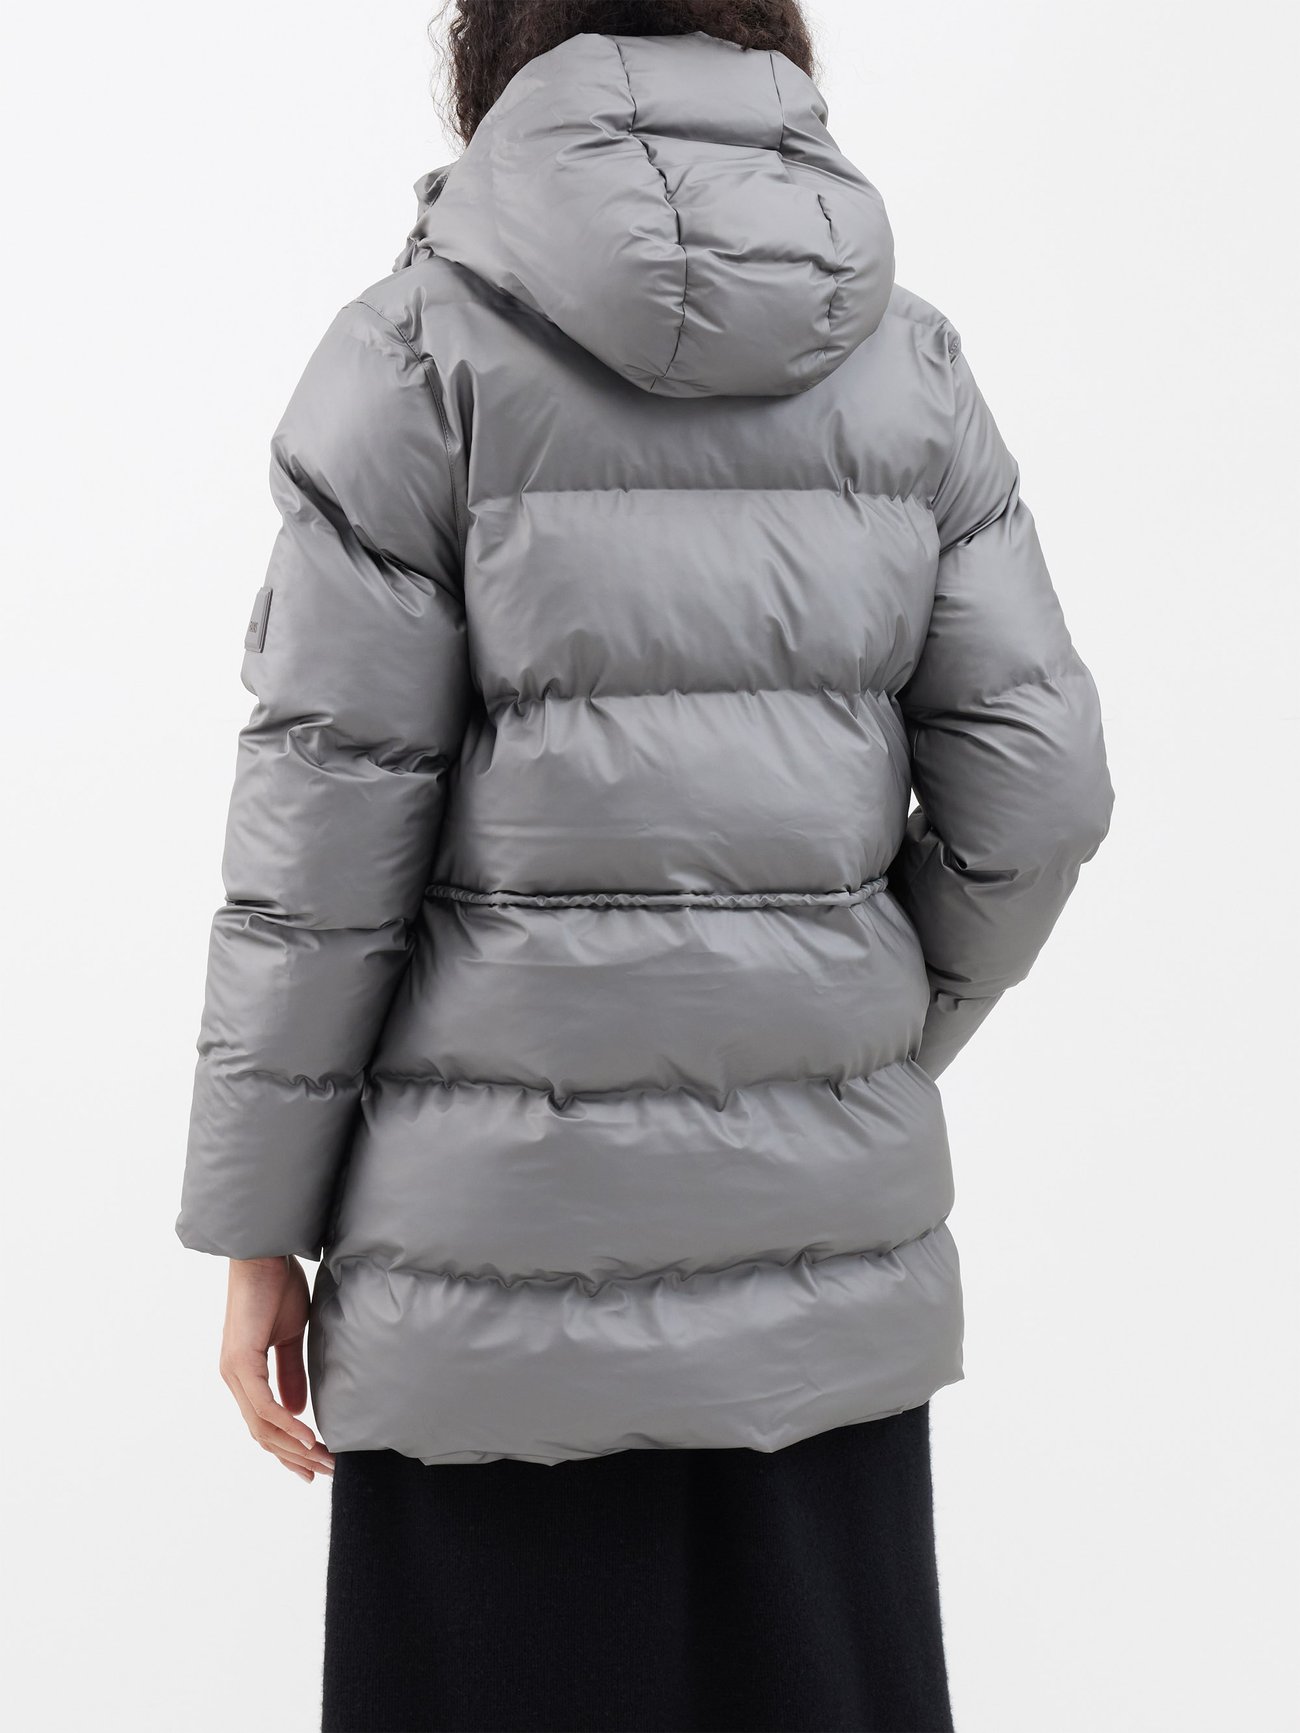 Rains® Alta Long Puffer Jacket in Metallic Grey for $515